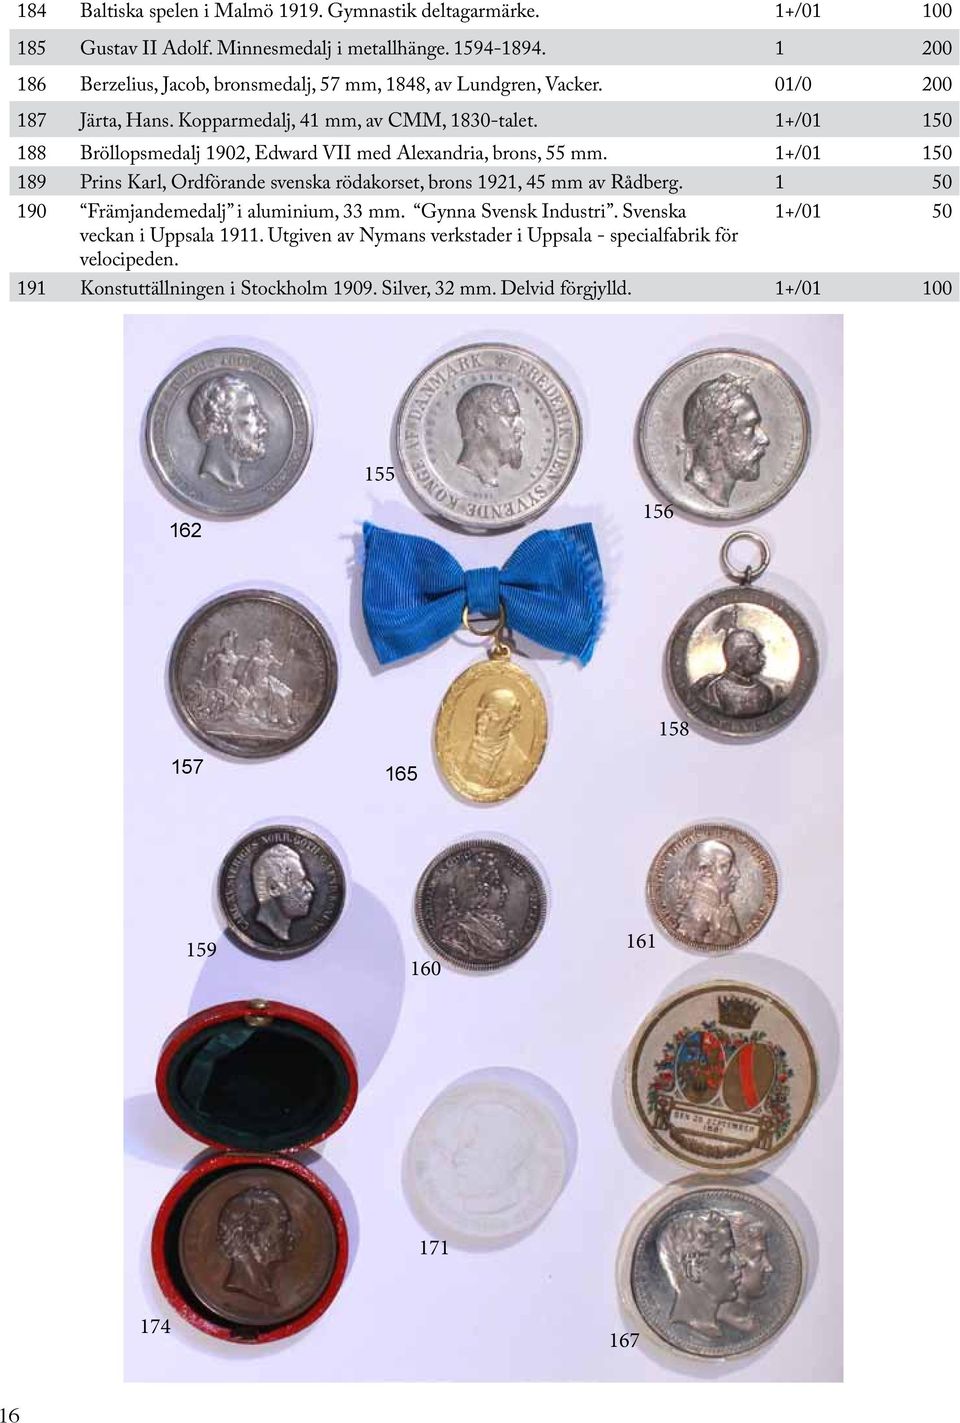 1+/01 150 188 Bröllopsmedalj 1902, Edward VII med Alexandria, brons, 55 mm. 1+/01 150 189 Prins Karl, Ordförande svenska rödakorset, brons 1921, 45 mm av Rådberg.